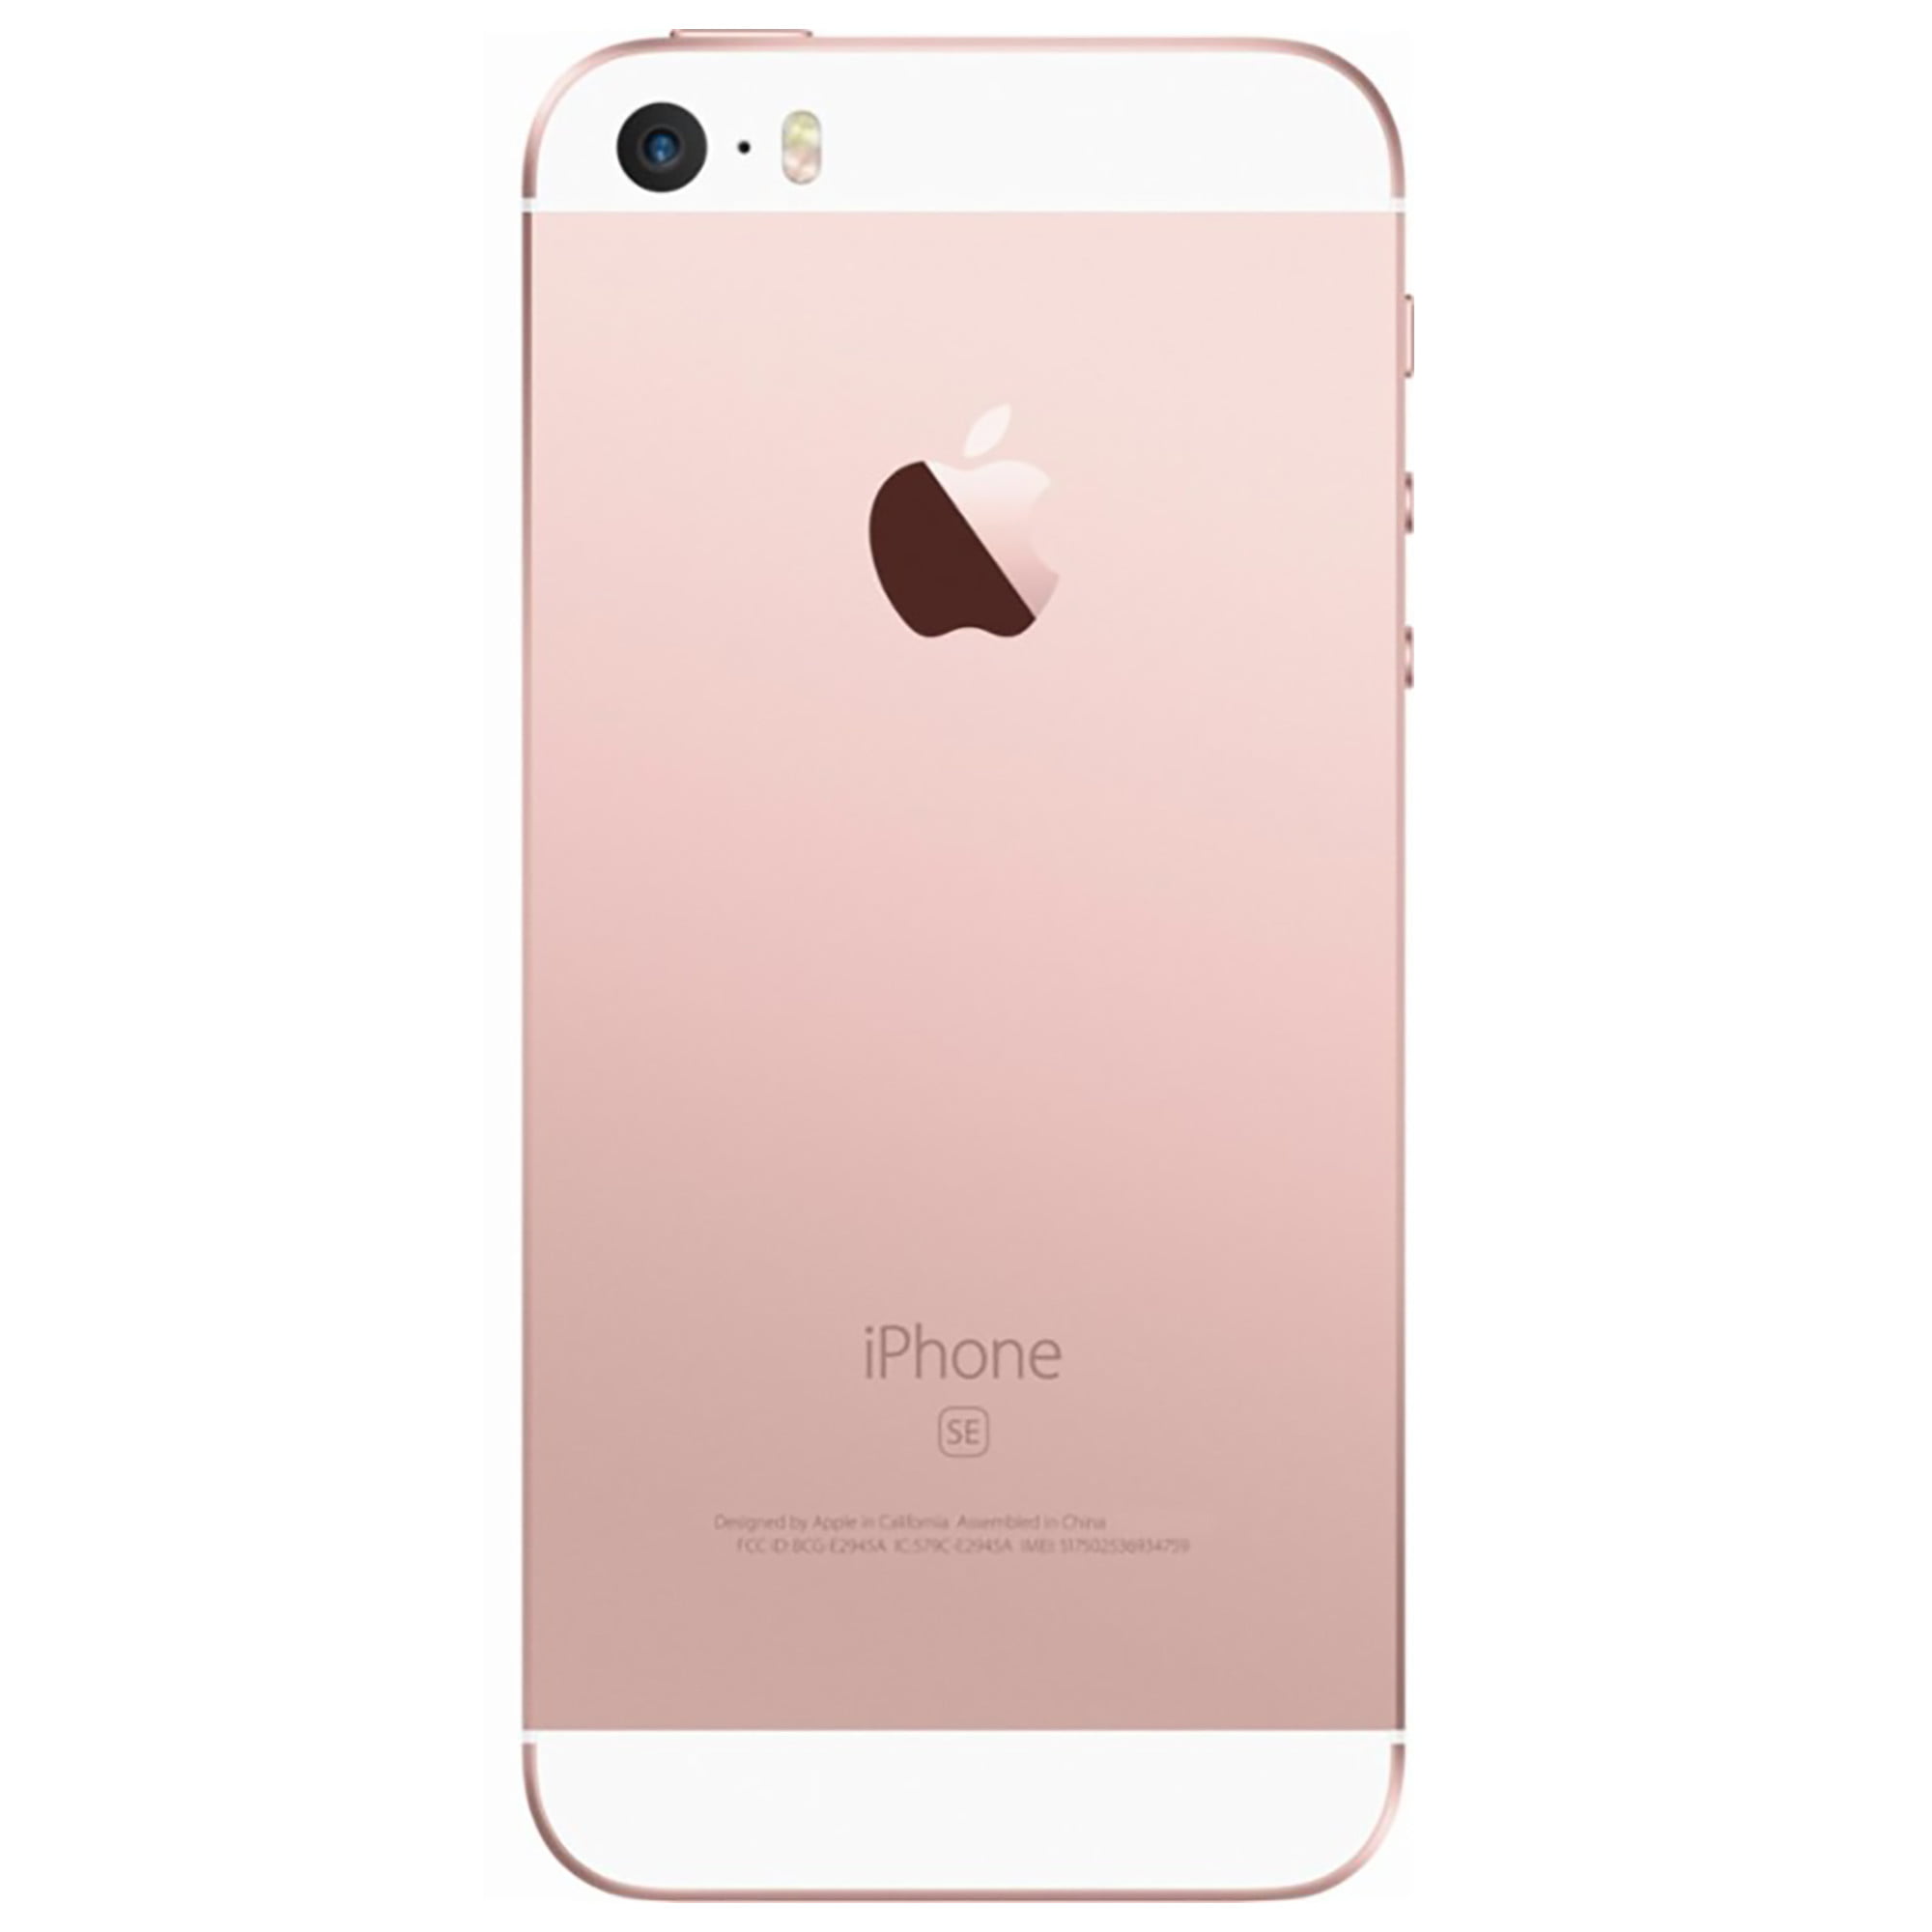 Apple iPhone SE 128GB Unlocked (GSM, Not CDMA), Rose Gold - Used 